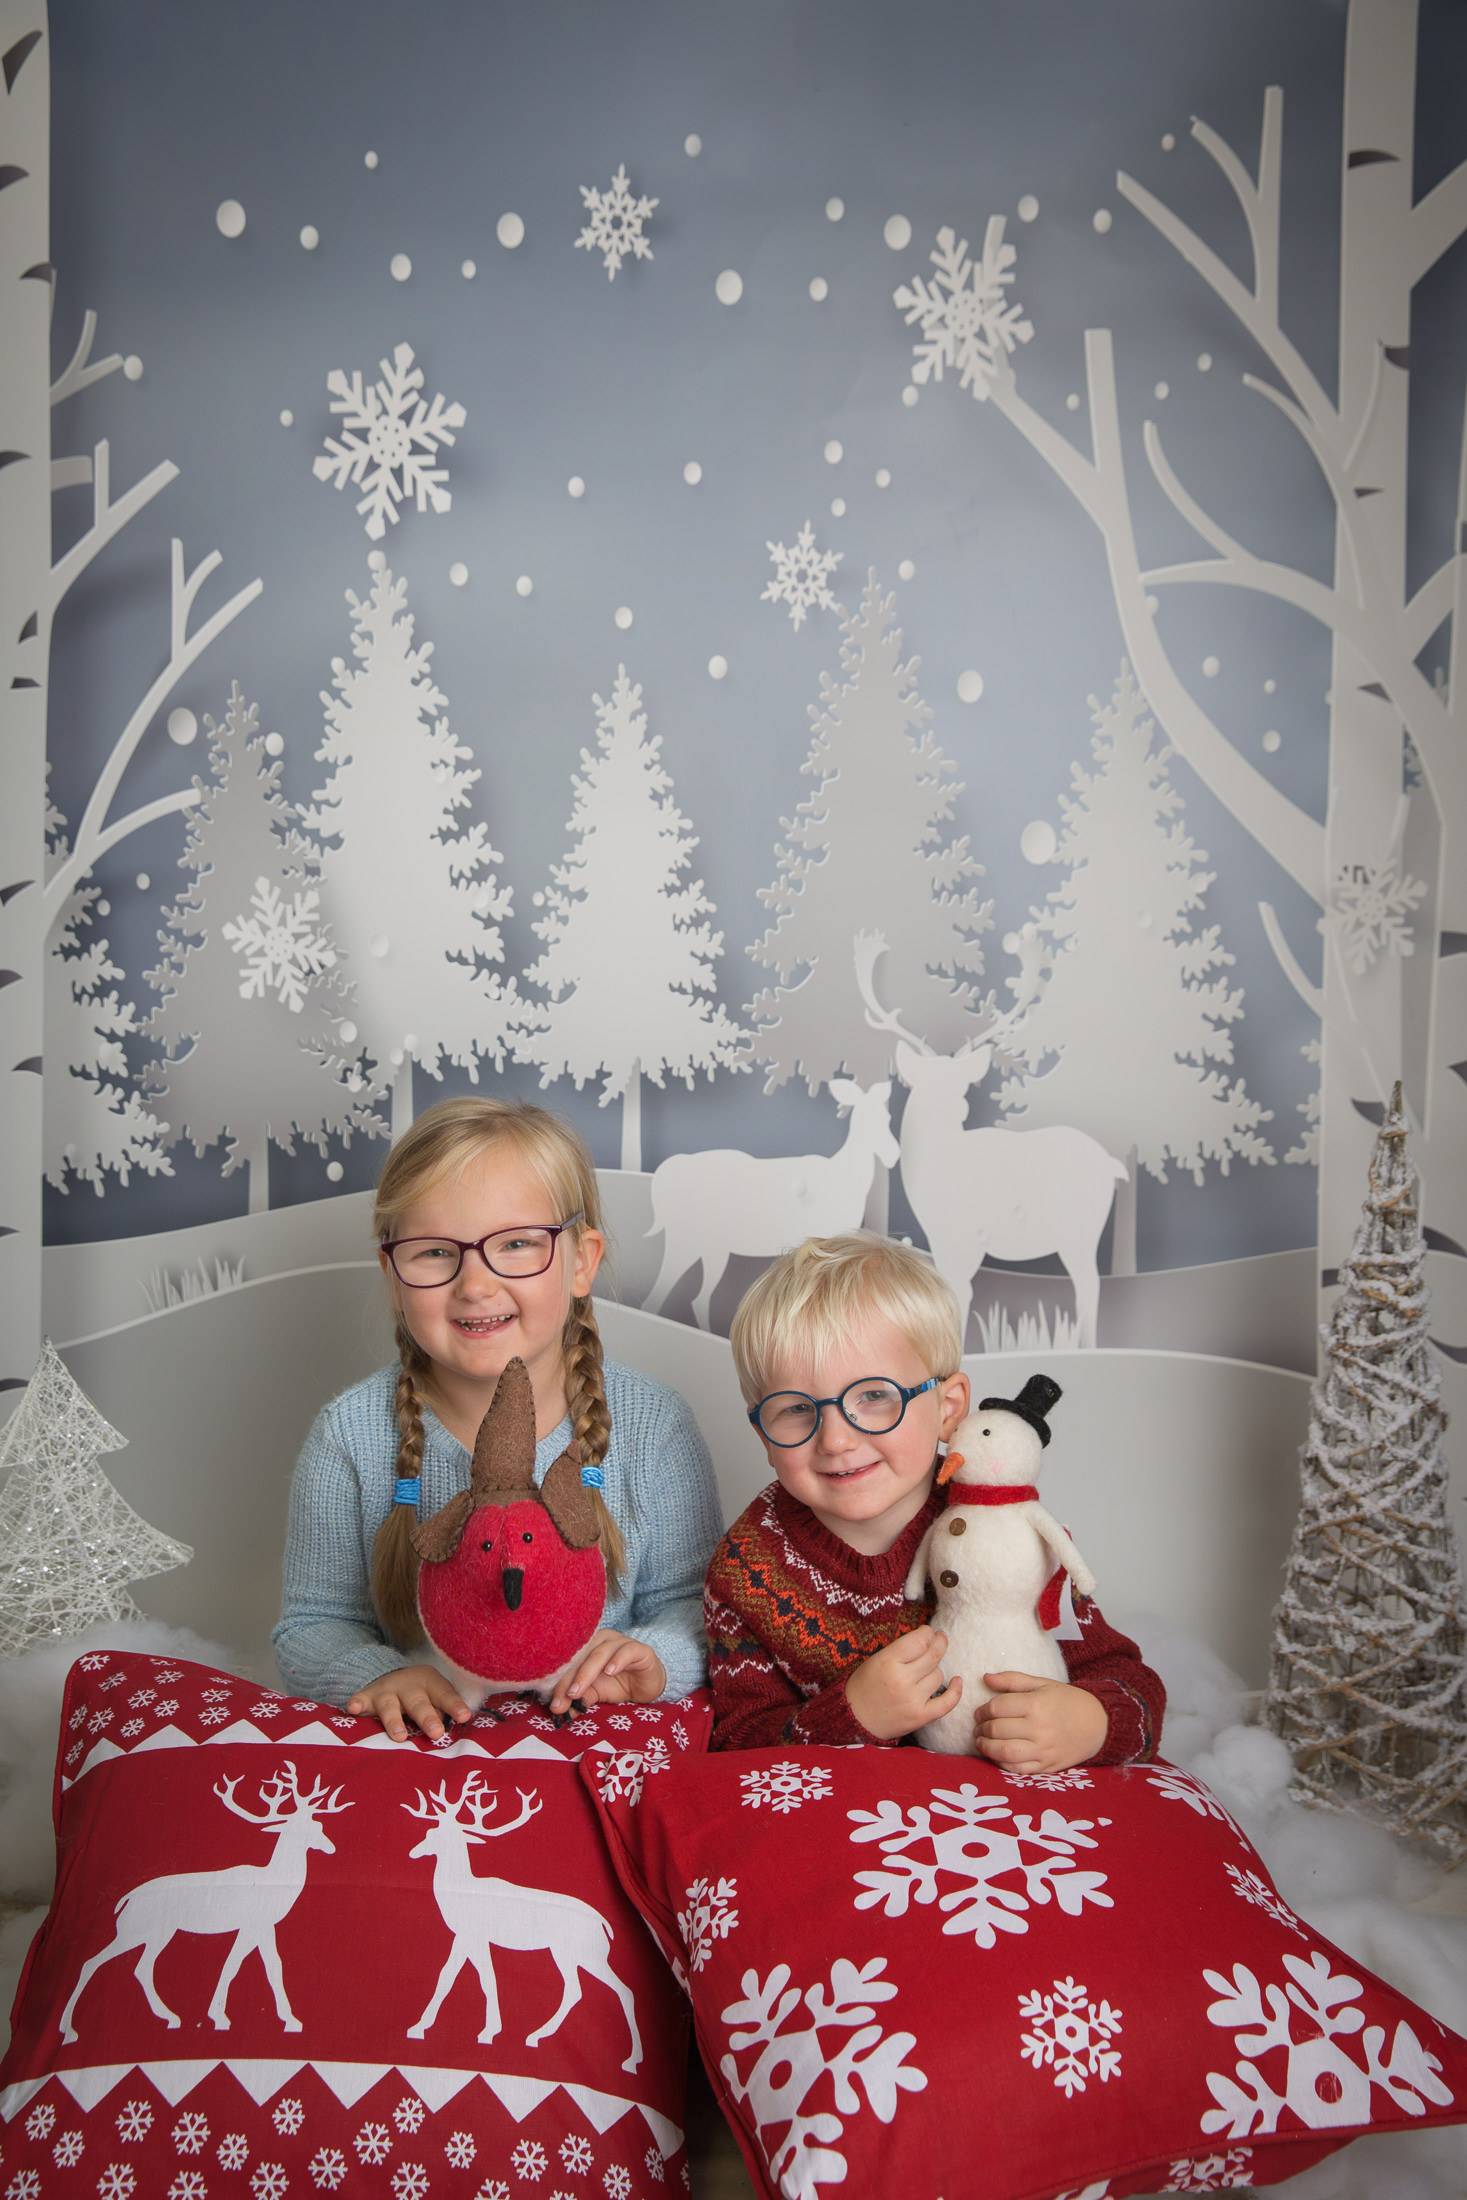 hayley morris photography christmas mini snowflakes children fun photos sessions